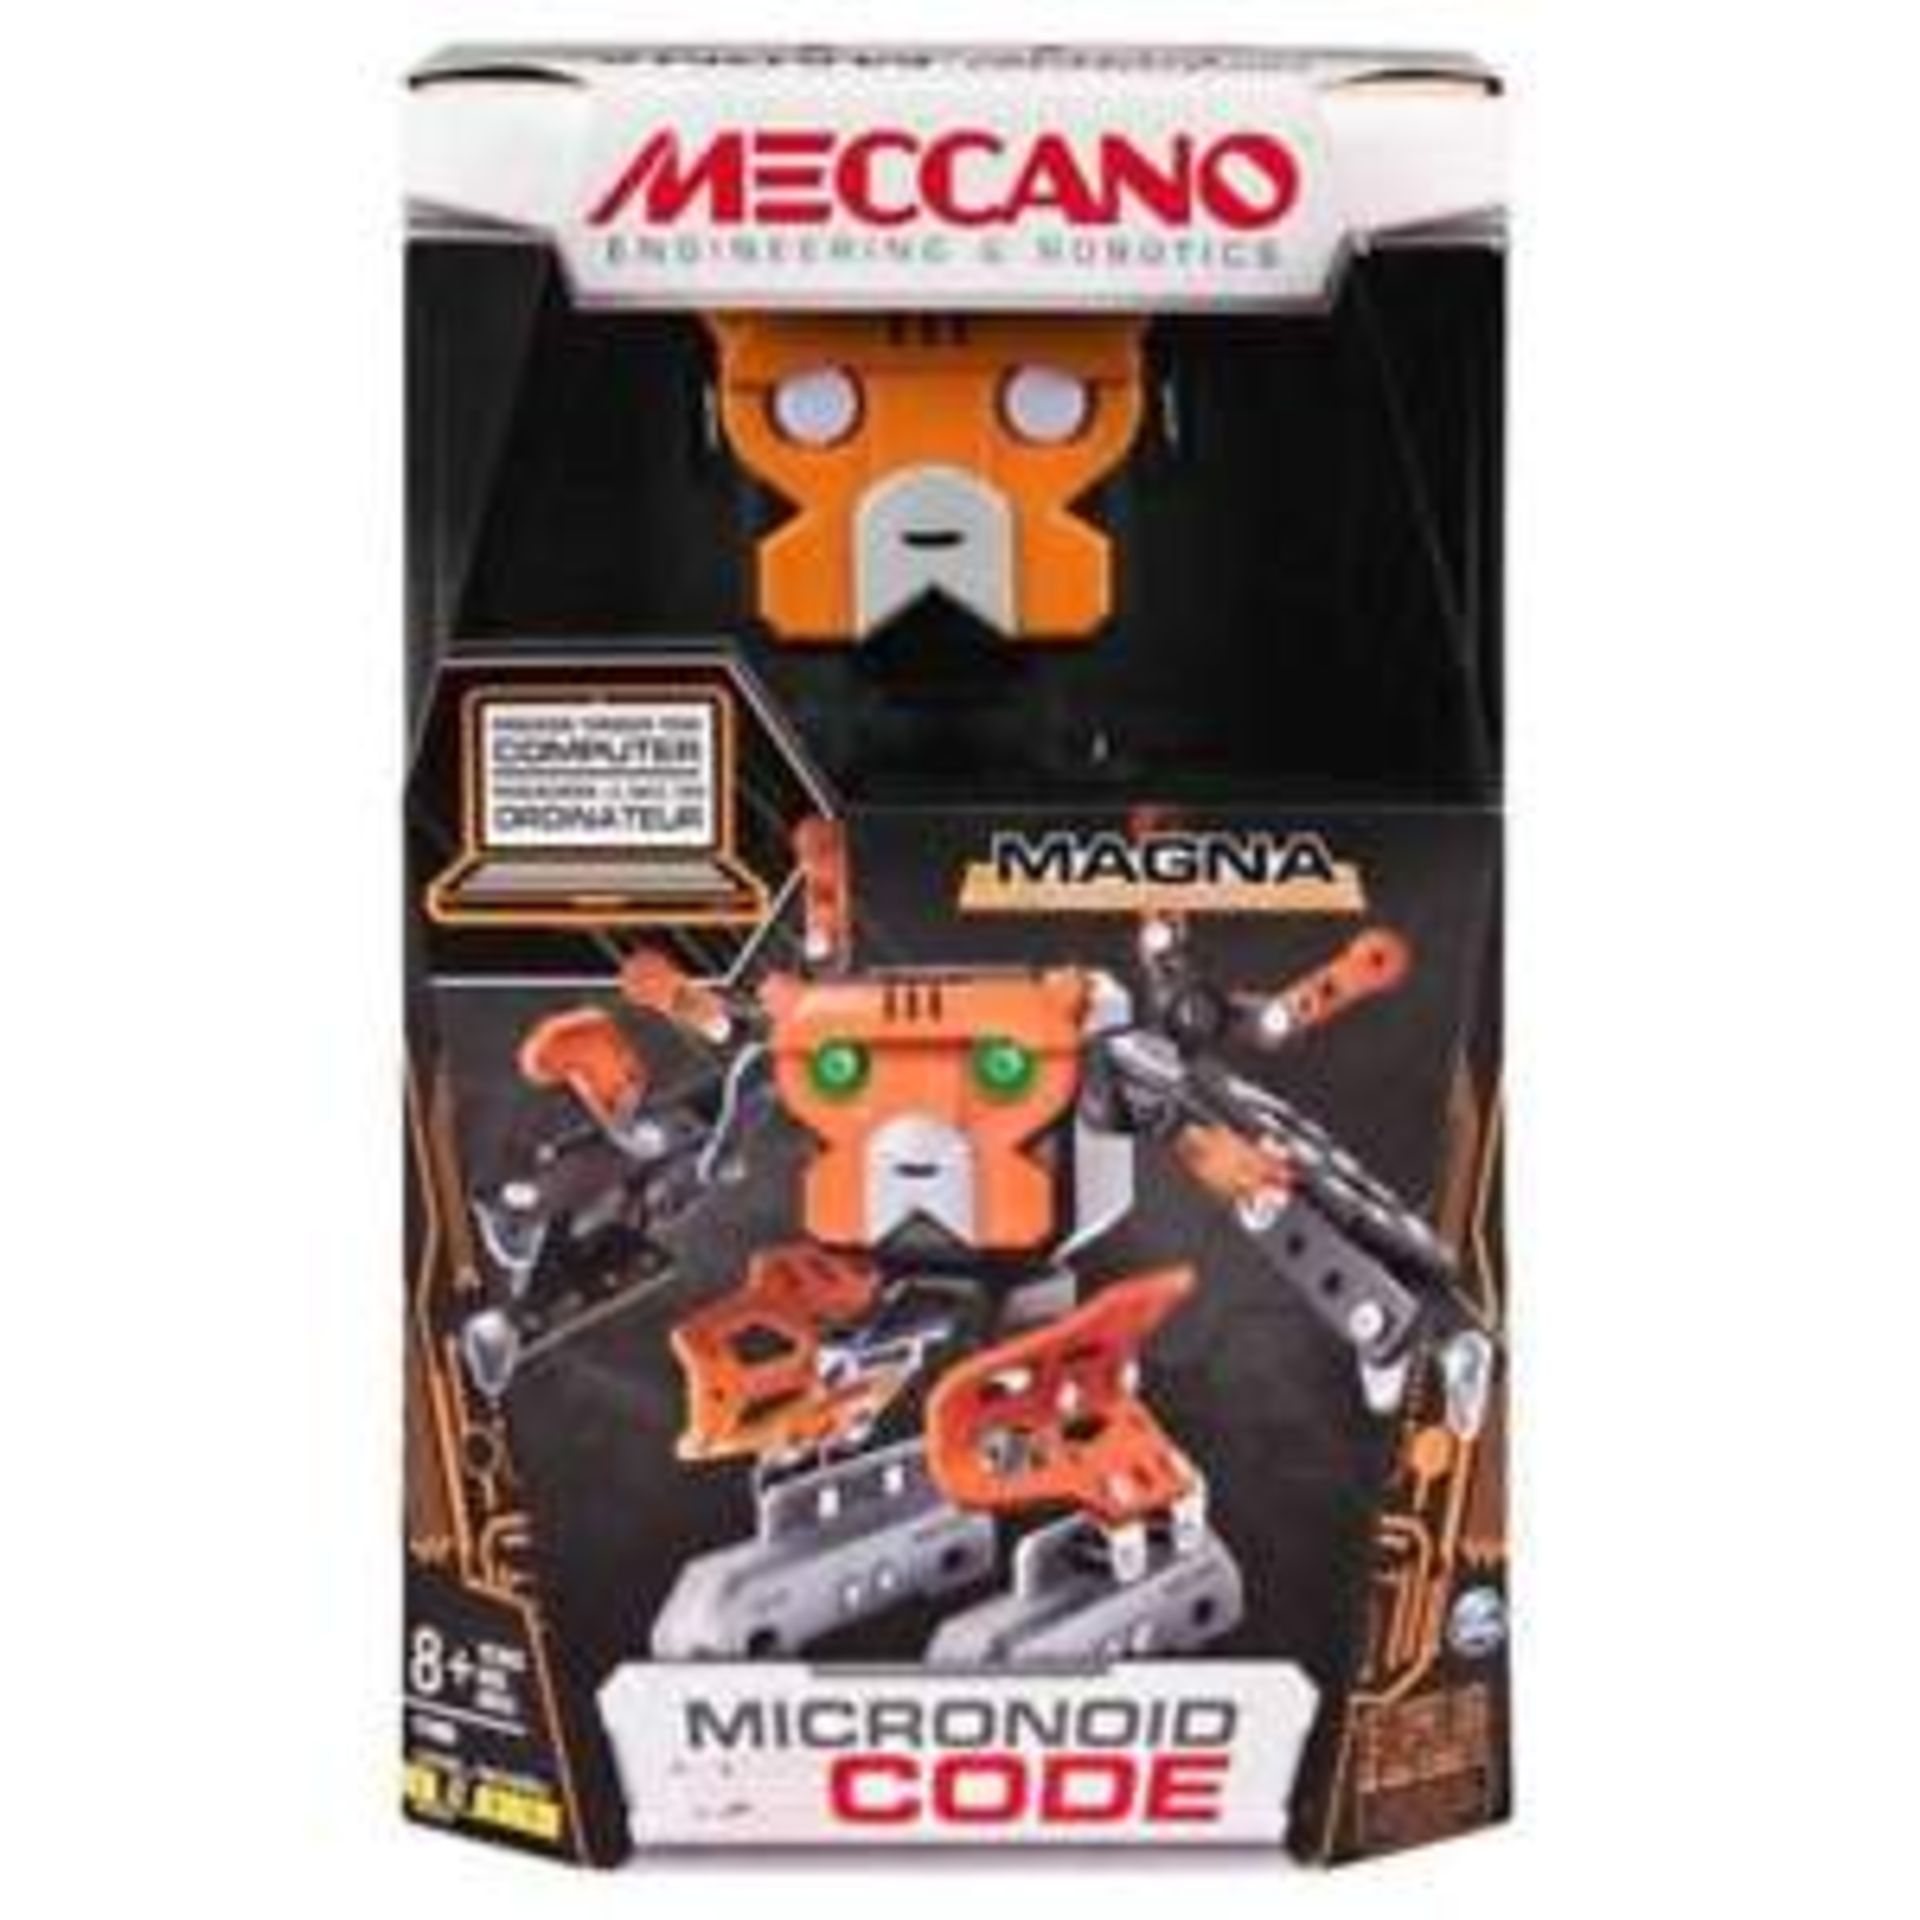 V Brand New Meccano Engineering & Robotics Micronoid Code Magna - Ebay Price £52.49 - Program - Image 2 of 3